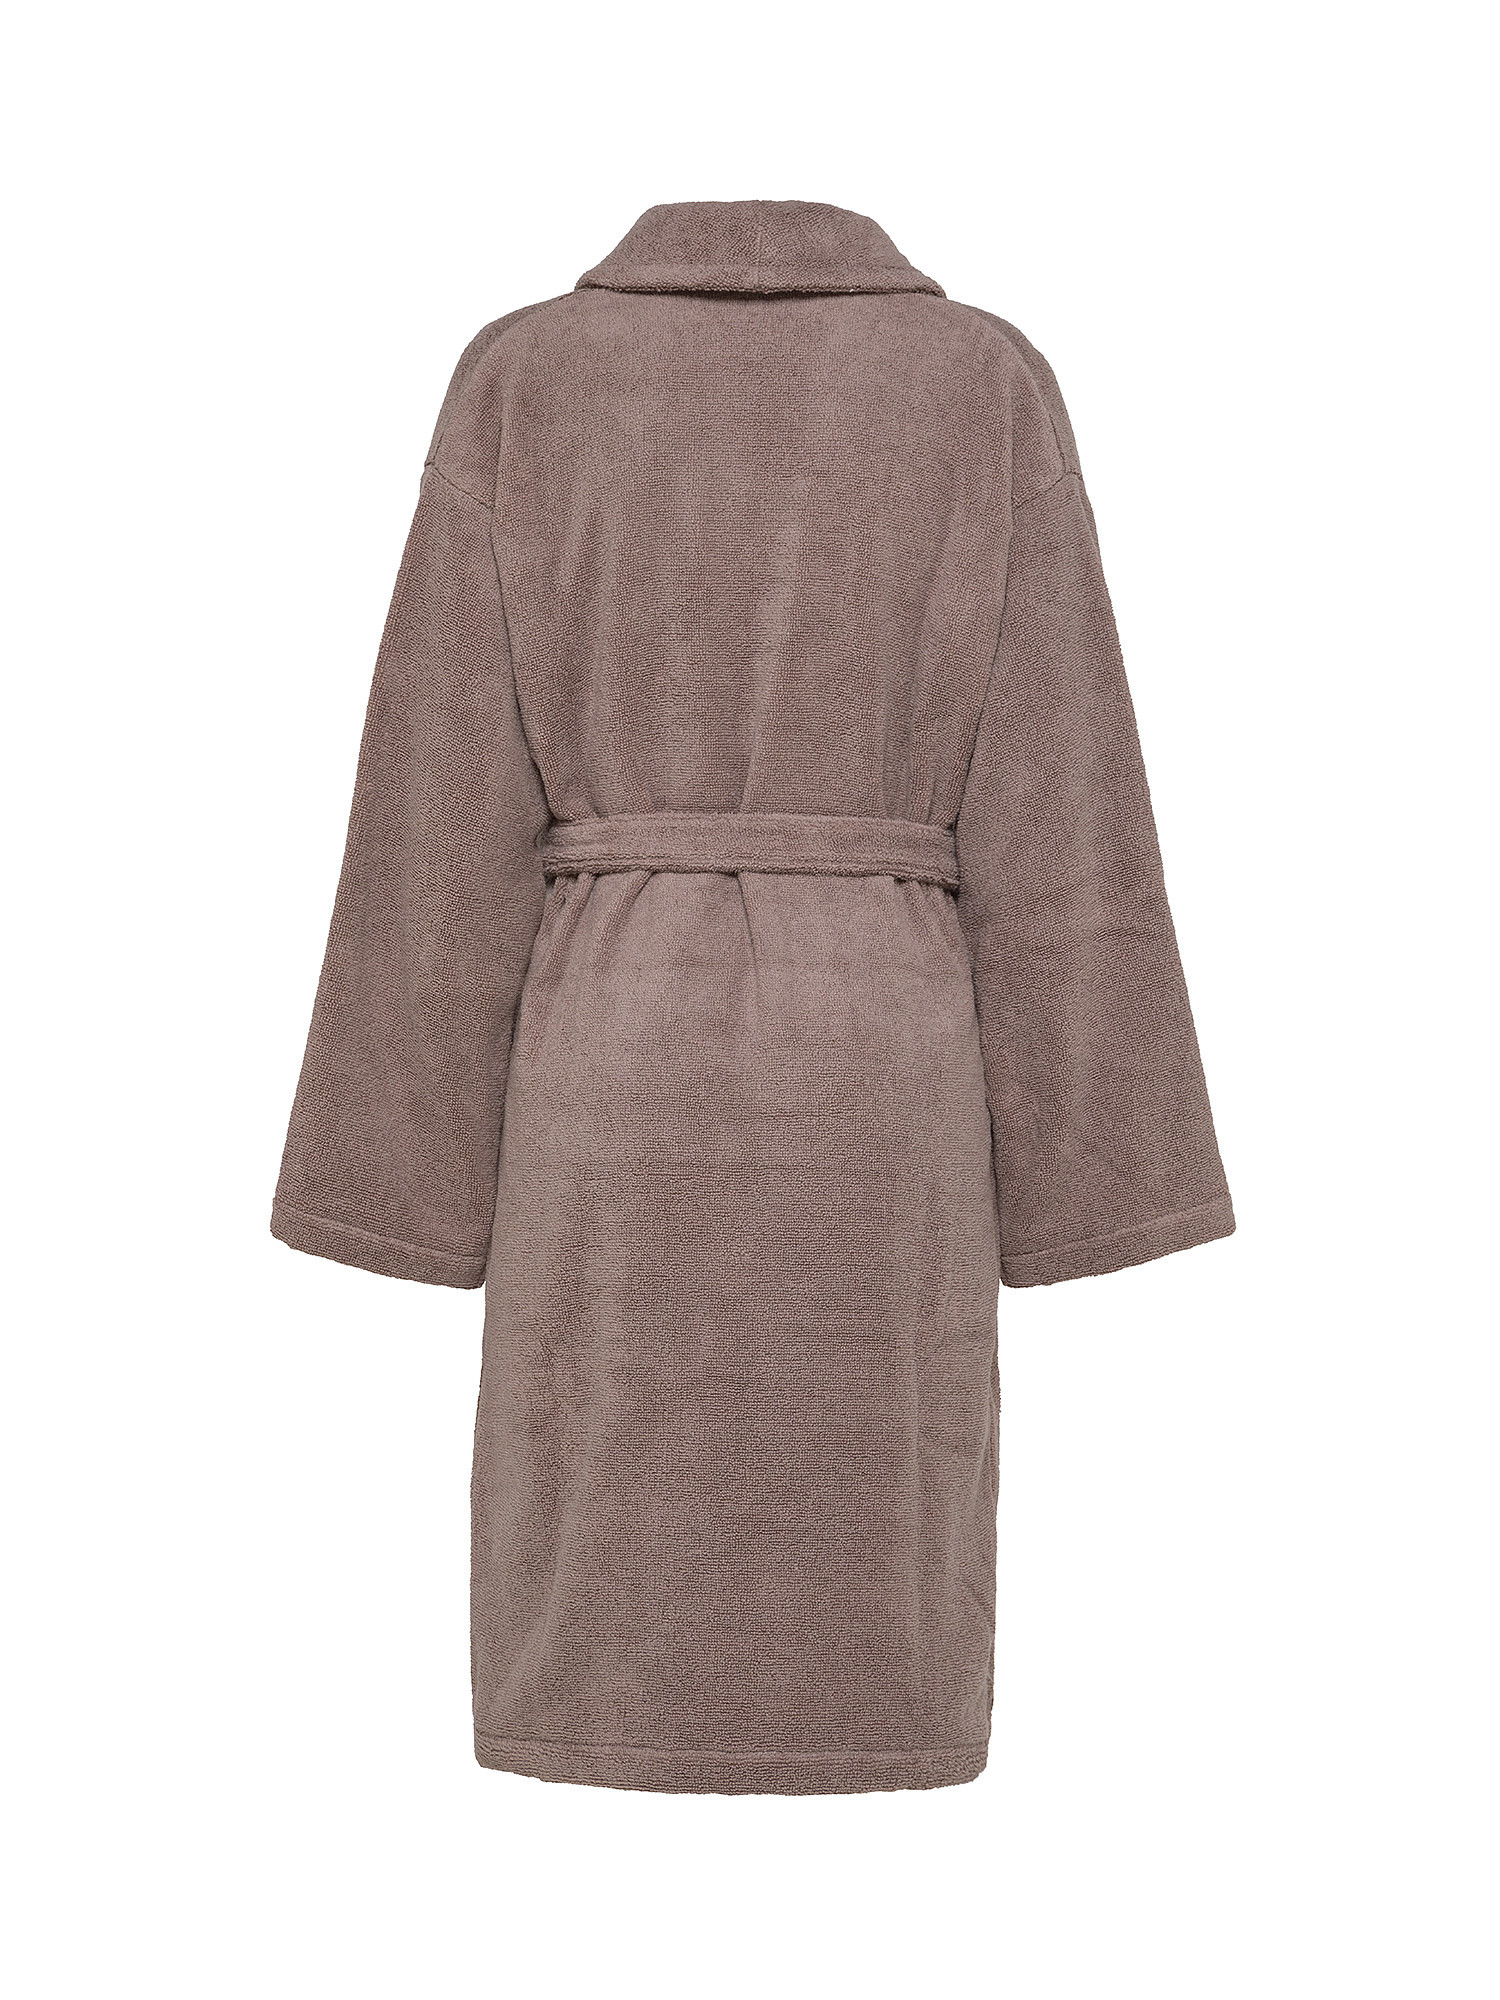 Thermae premium quality cotton bathrobe, Brown, large image number 1